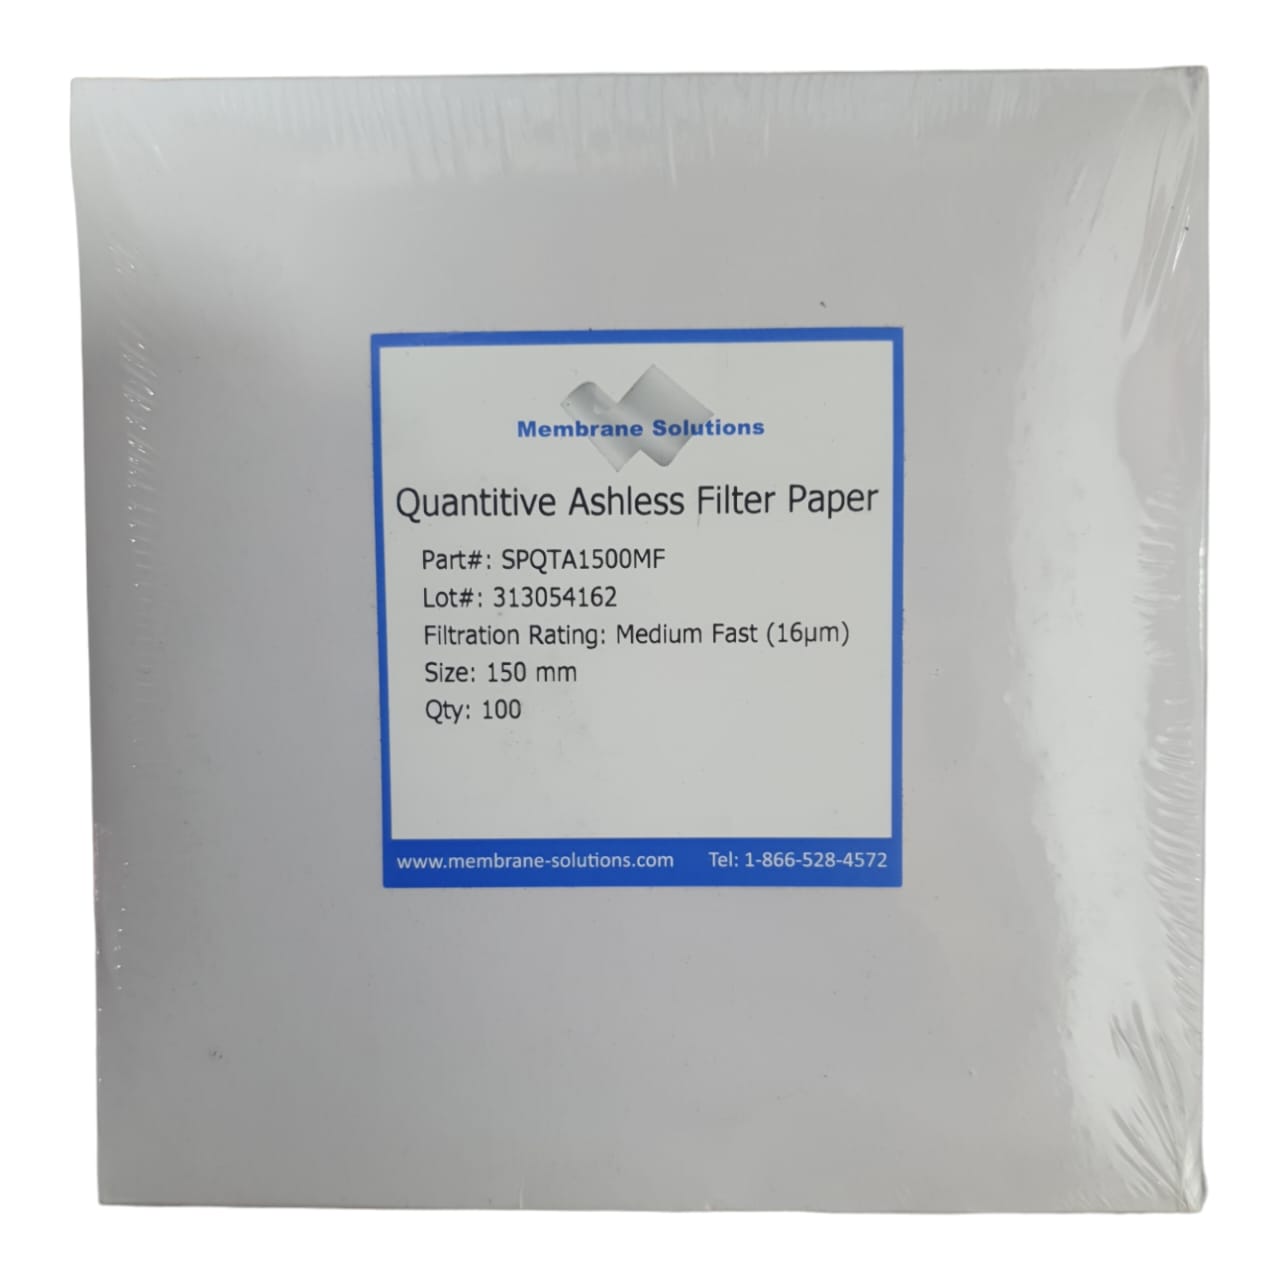 Quantitive Ashless Filter Paper 150 mm